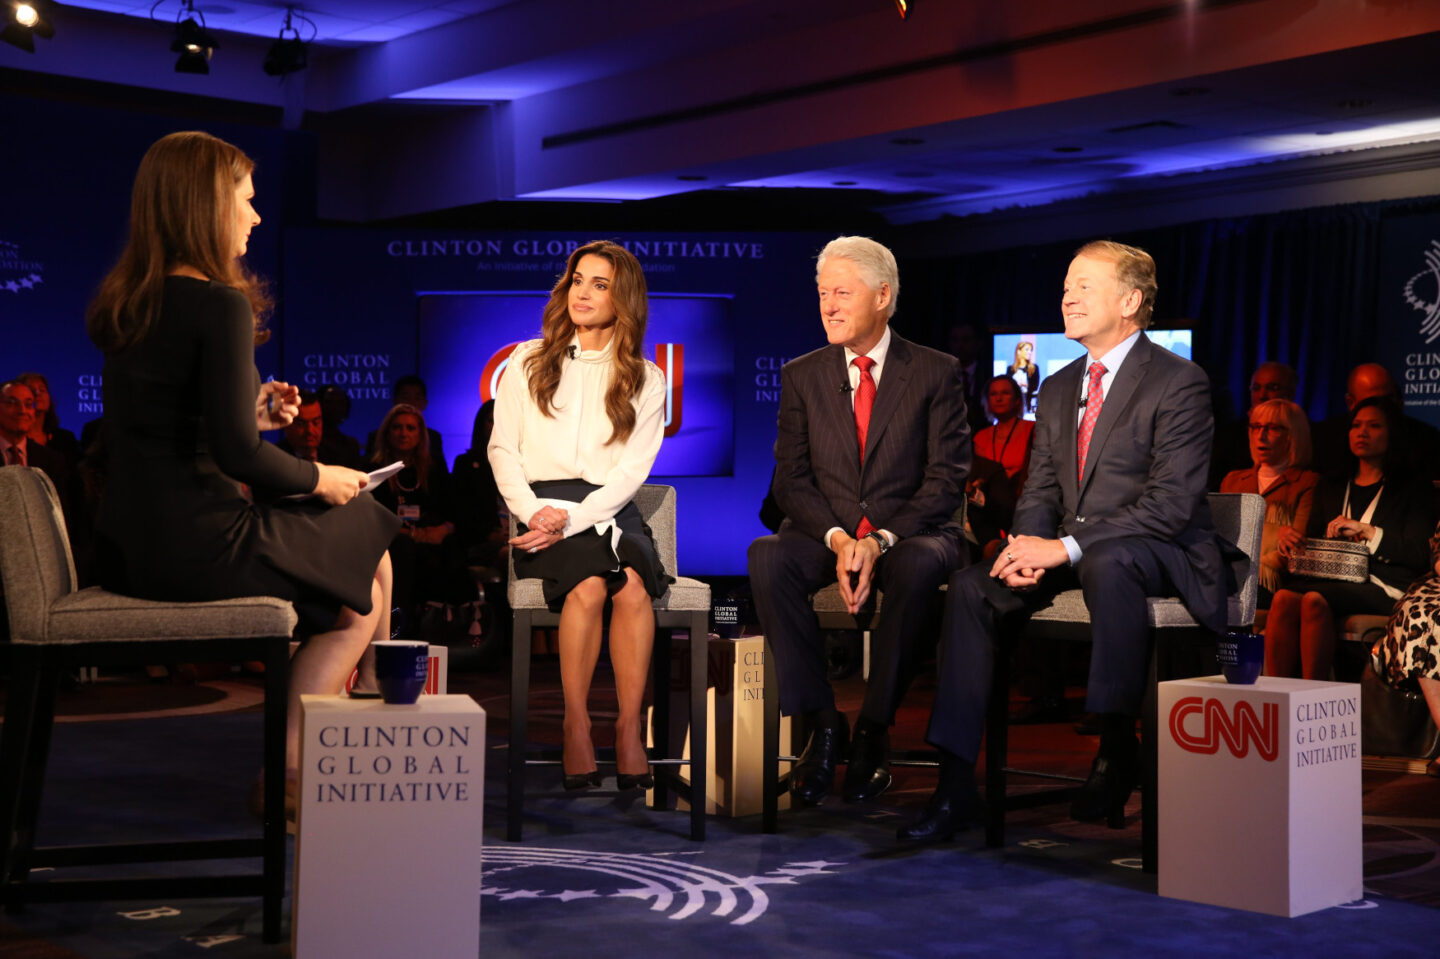 Queen Rania Al Abdullah, President Bill Clinton, and Tony Blair participate in a special session